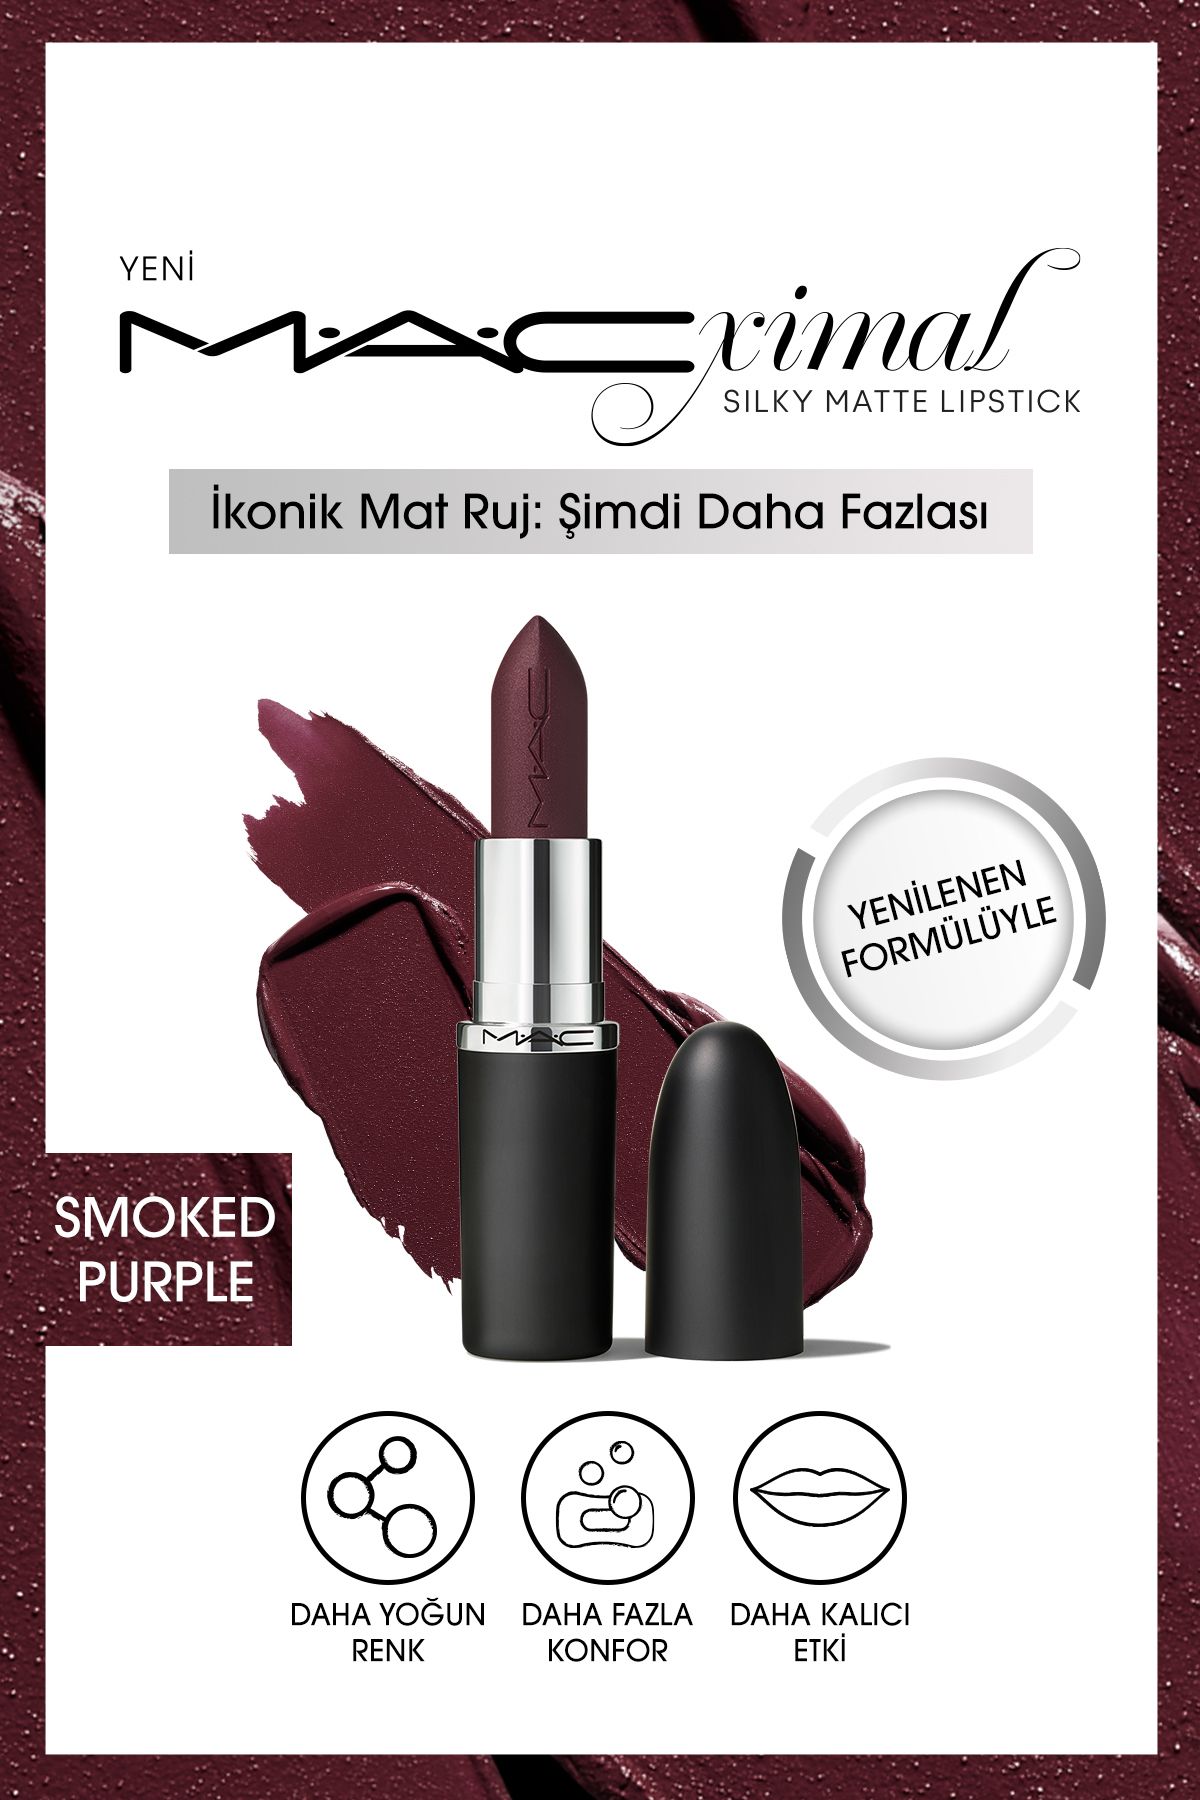 Mac SMOKED PURPLE - M·A·CXIMAL Silky Matte Lipstick Nemlendirme Etkili Yoğun Renk Sağlayan Ruj